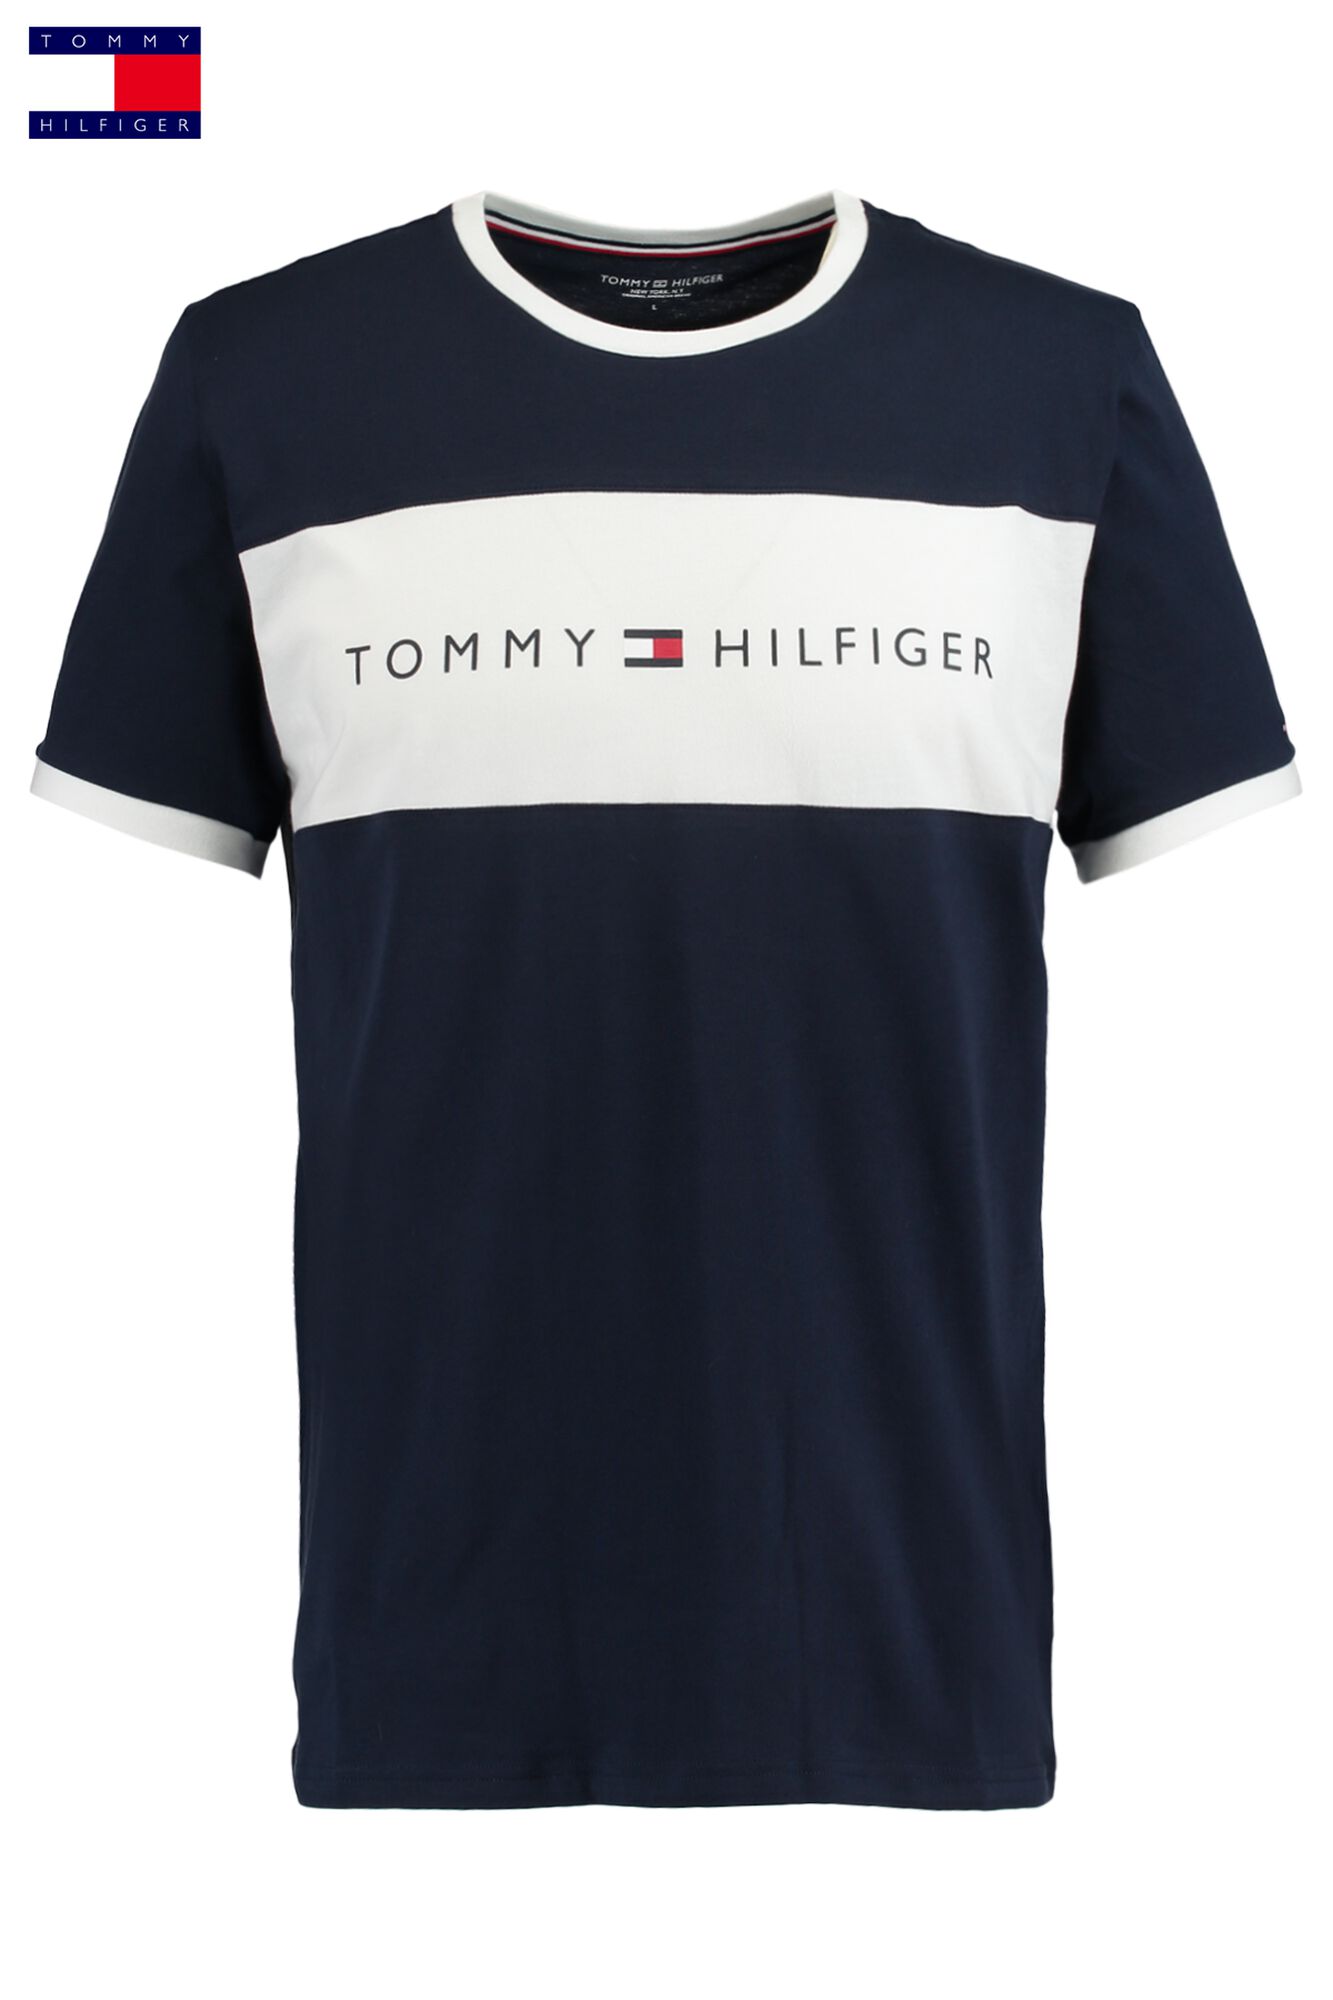 Hommes T-shirt Tommy Hilfiger Logo Bleu Acheter en Ligne